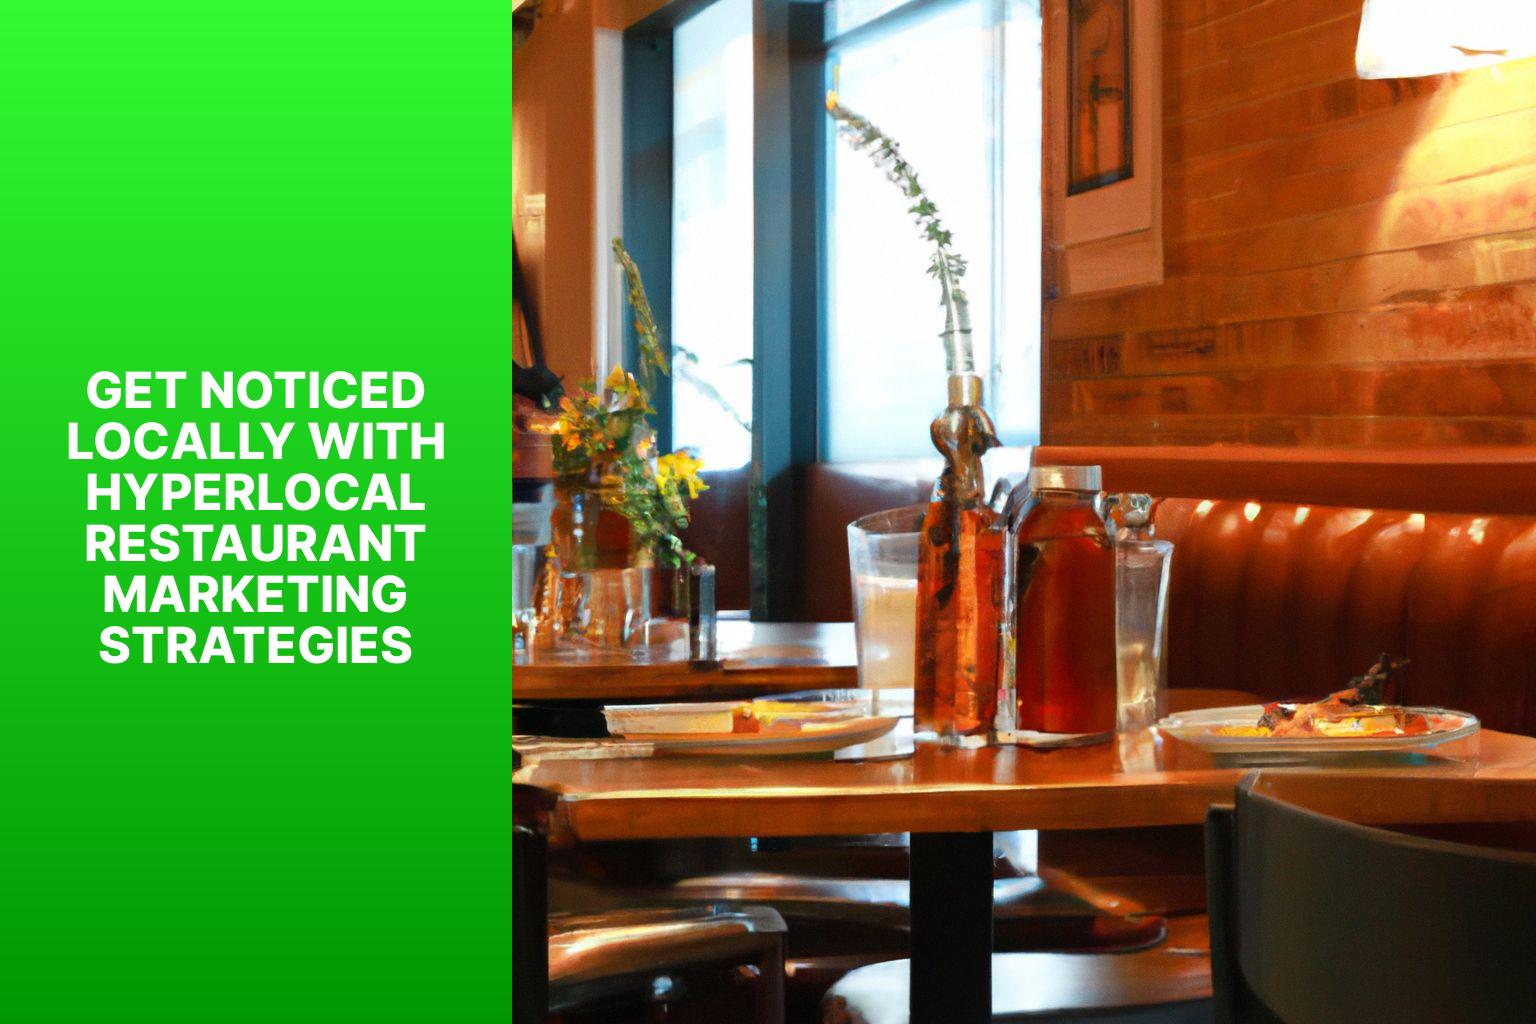 Get Noticed Locally with Hyperlocal Restaurant Marketing Strategies